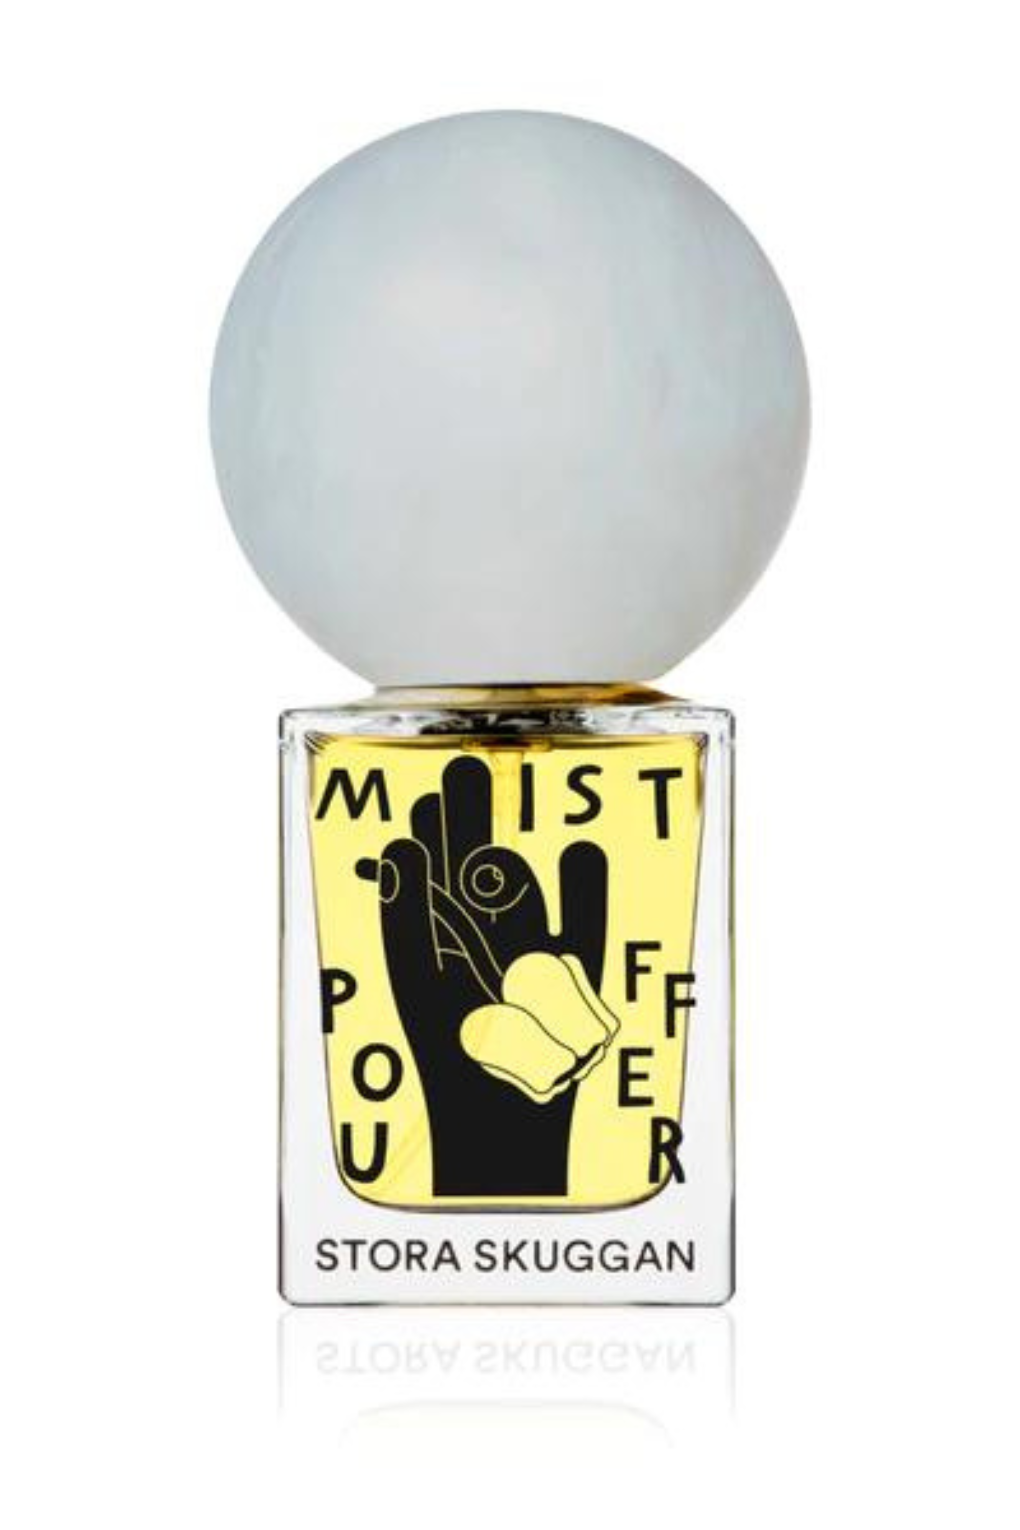 Stora Skuggan Mistpouffer Perfum 30 ml-Idun-St. Paul